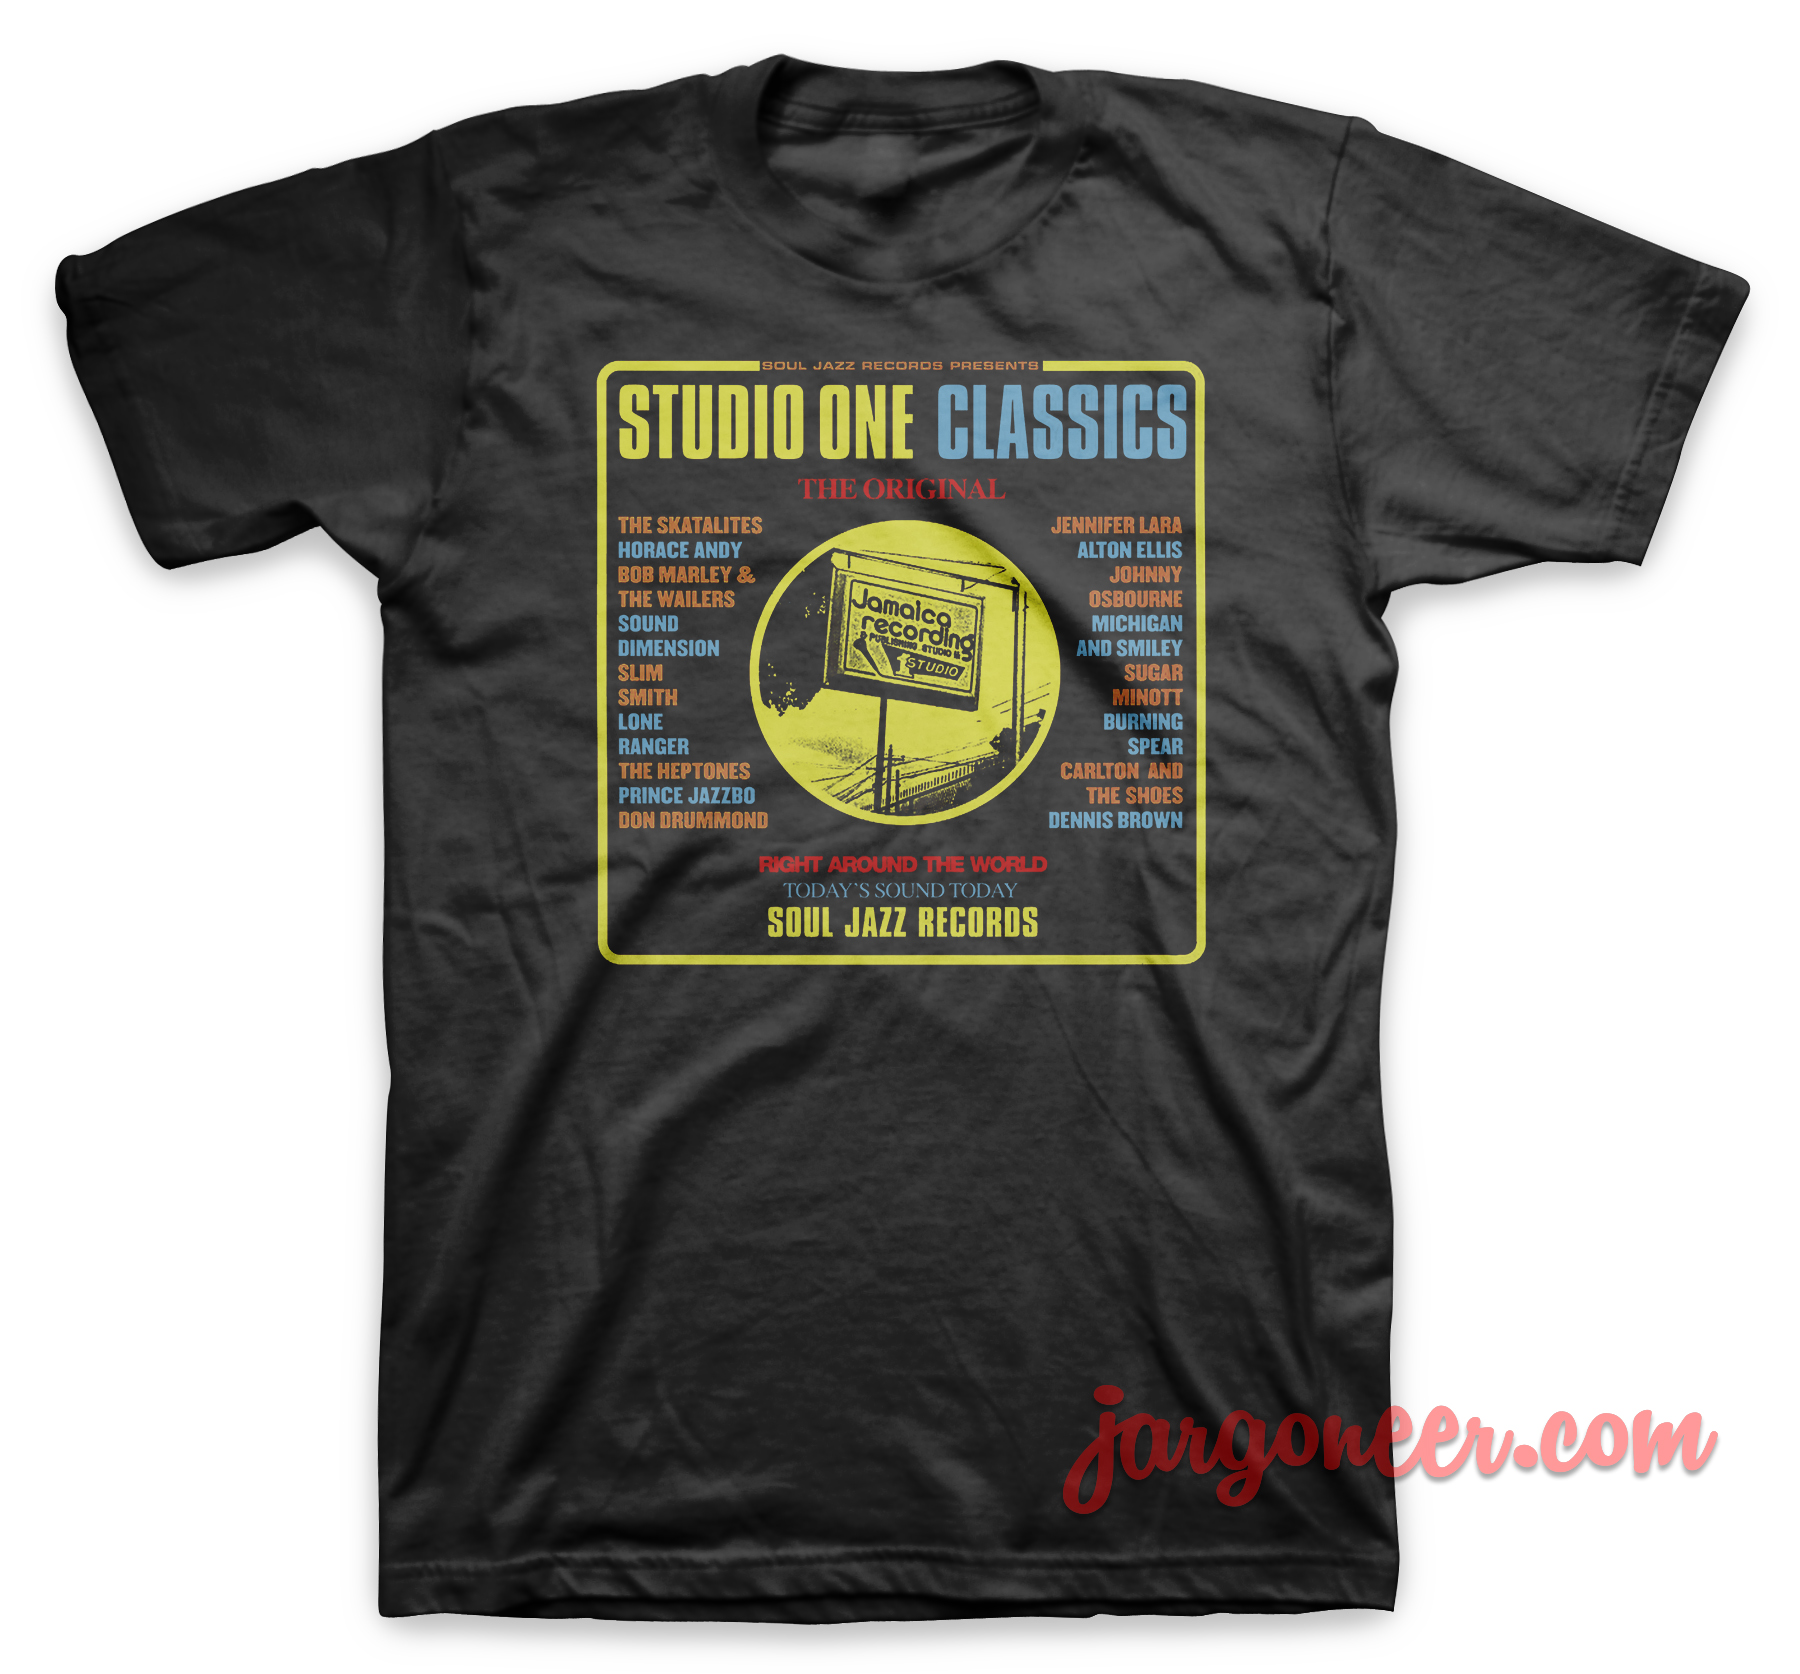 Studio One Classics T-Shirt Size S,M,L,XL,2XL,3XL - Jargoneer.com